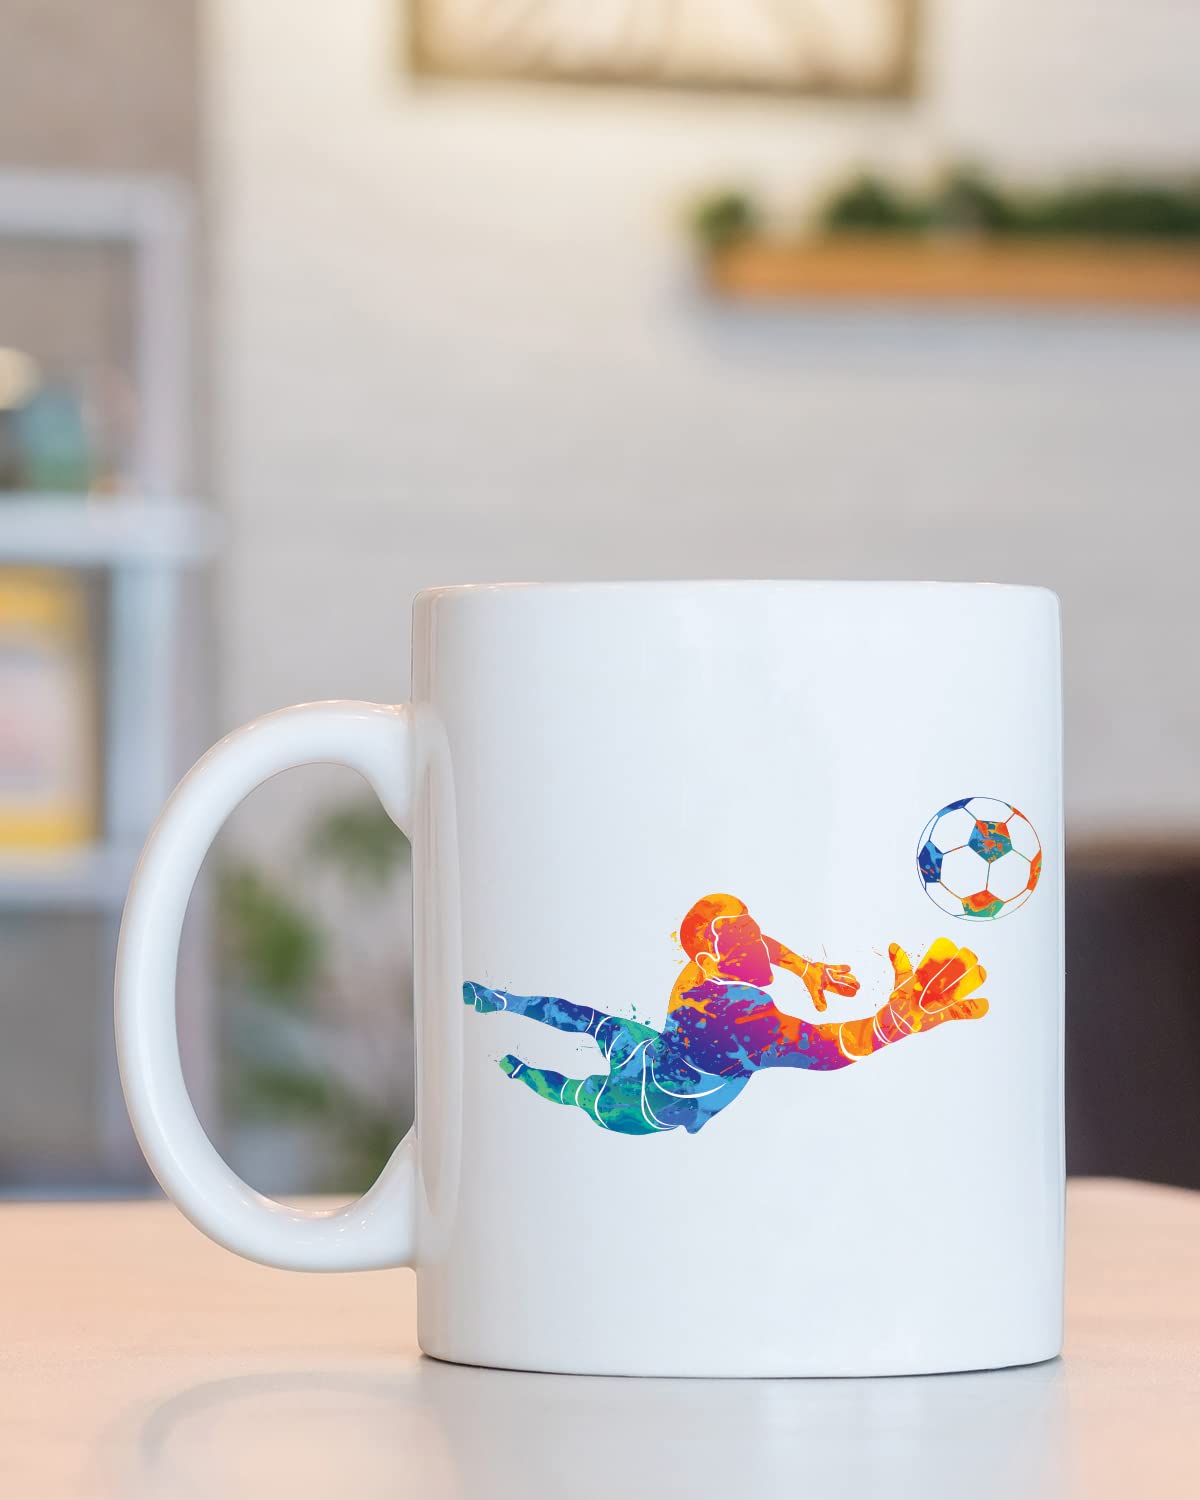 Football Coffee Mug - Unique Gifts for Football Lovers, Football Mugs, Gifts for Football Fans, Soccer Coffee Mug for Husband Boyfriend Birthday, Valentine's Day Football Gift